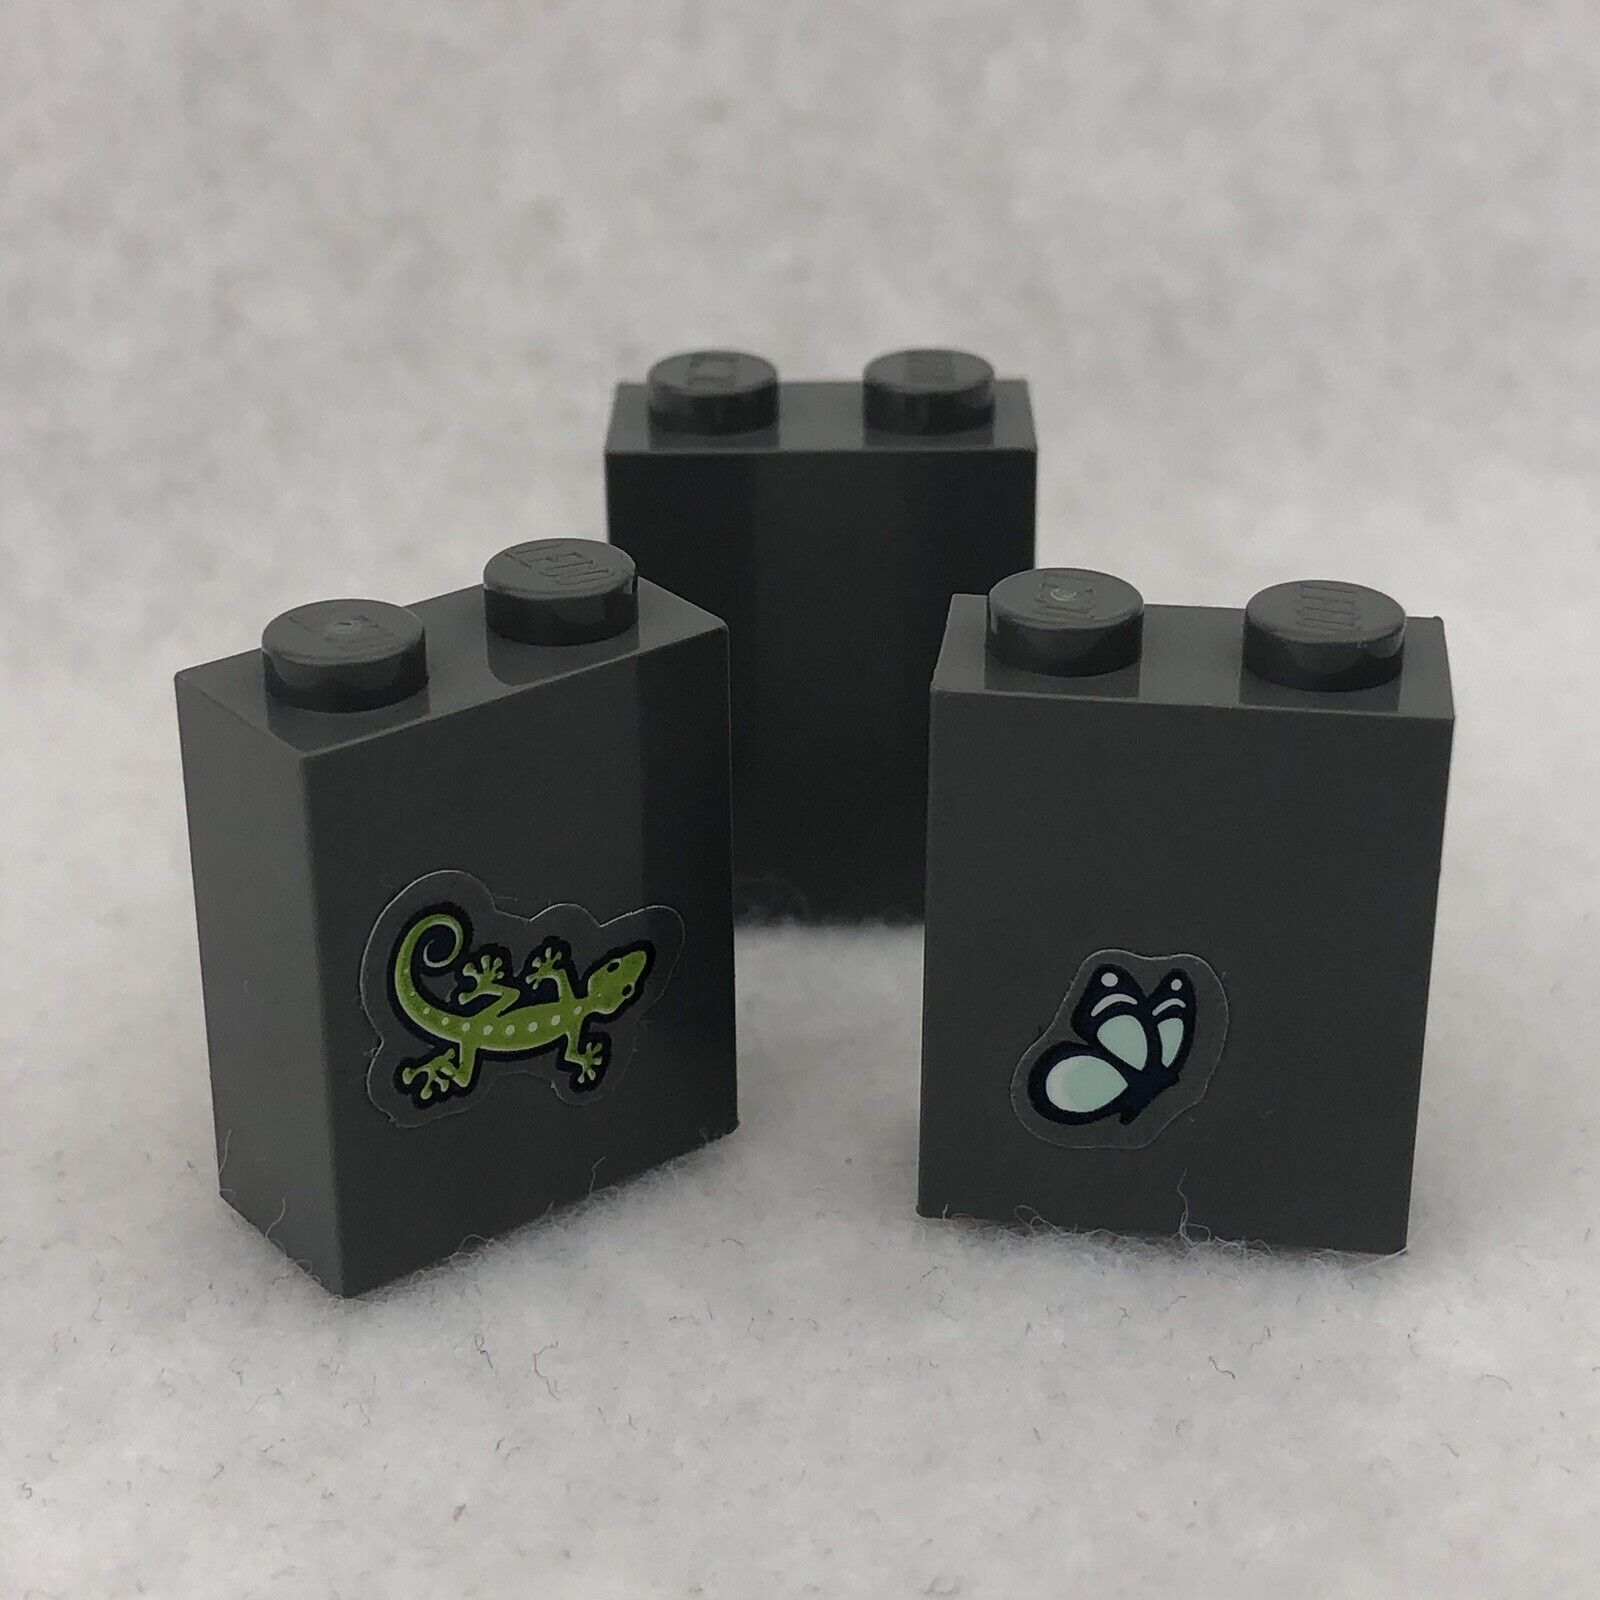 LEGO 3245c Dark Bluish Gray Brick 1 x 2 x 2 with Inside Stud Holder (x3)